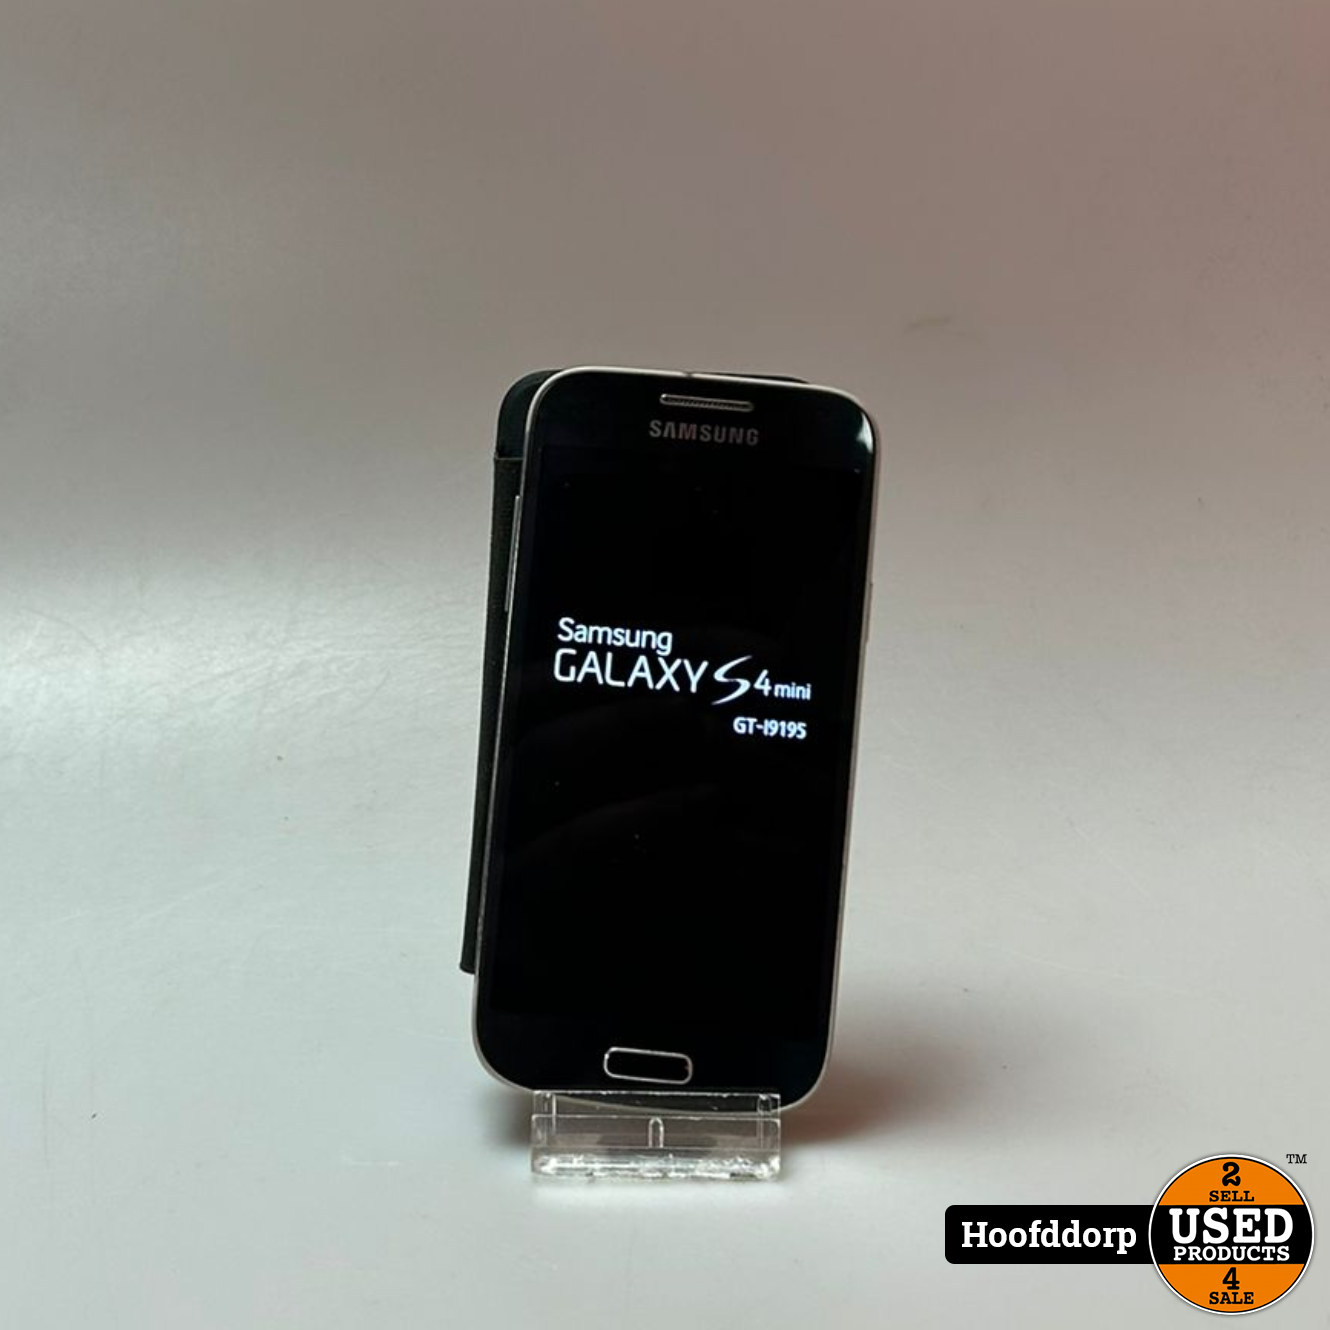 kader oase landelijk Samsung Galaxy S4 mini - Used Products Hoofddorp